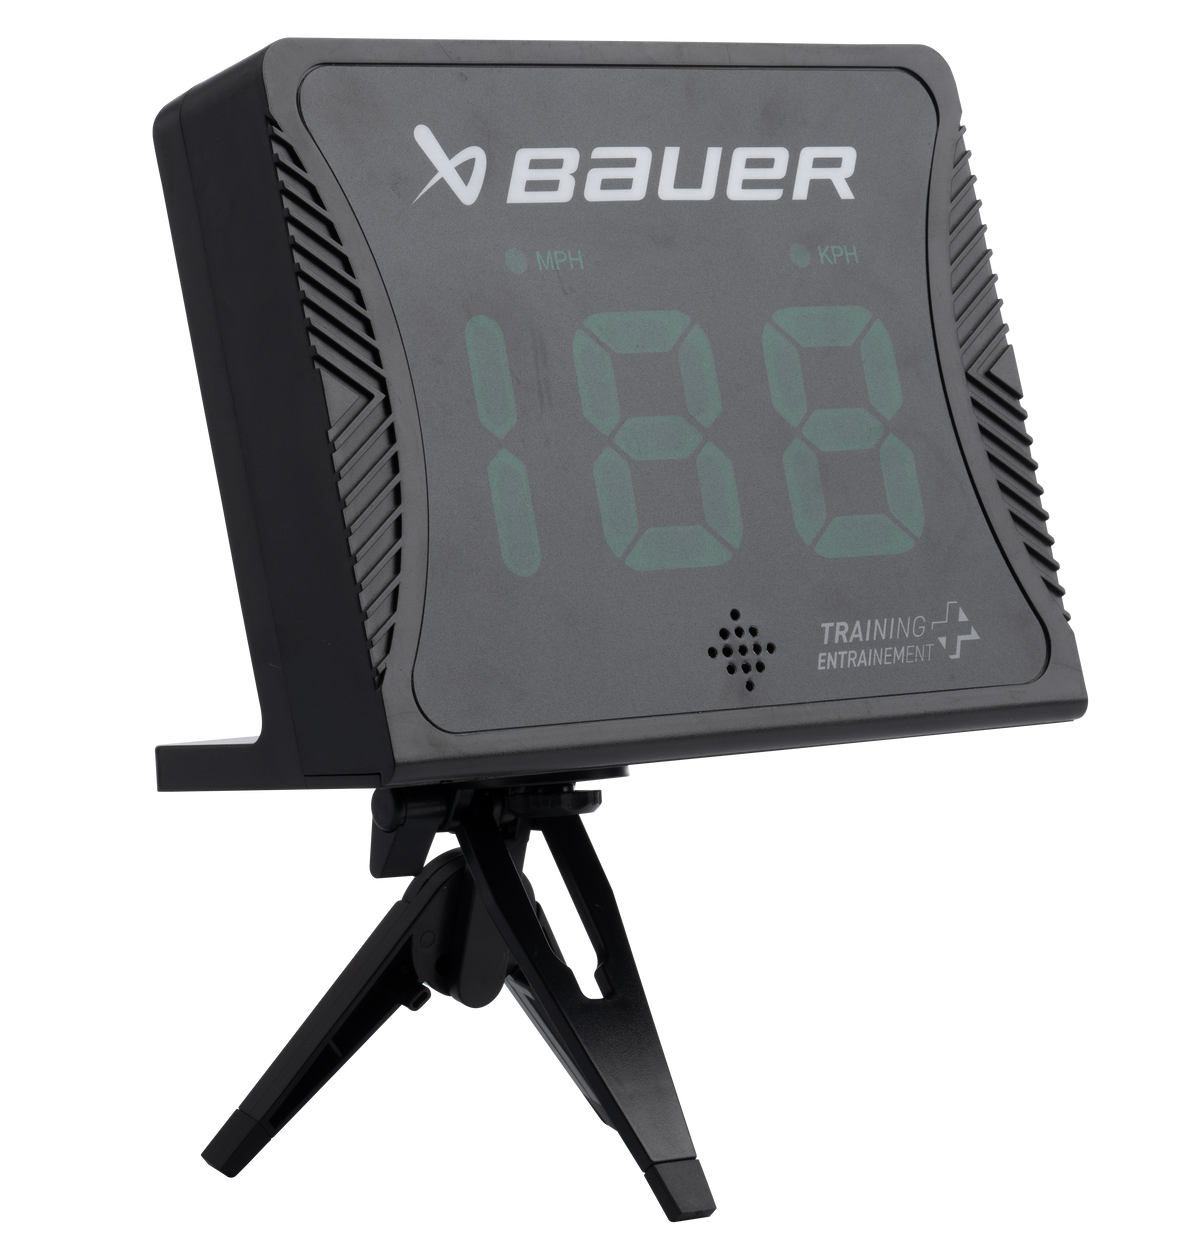 Bauer Multi Sport Reaction Radar Gun